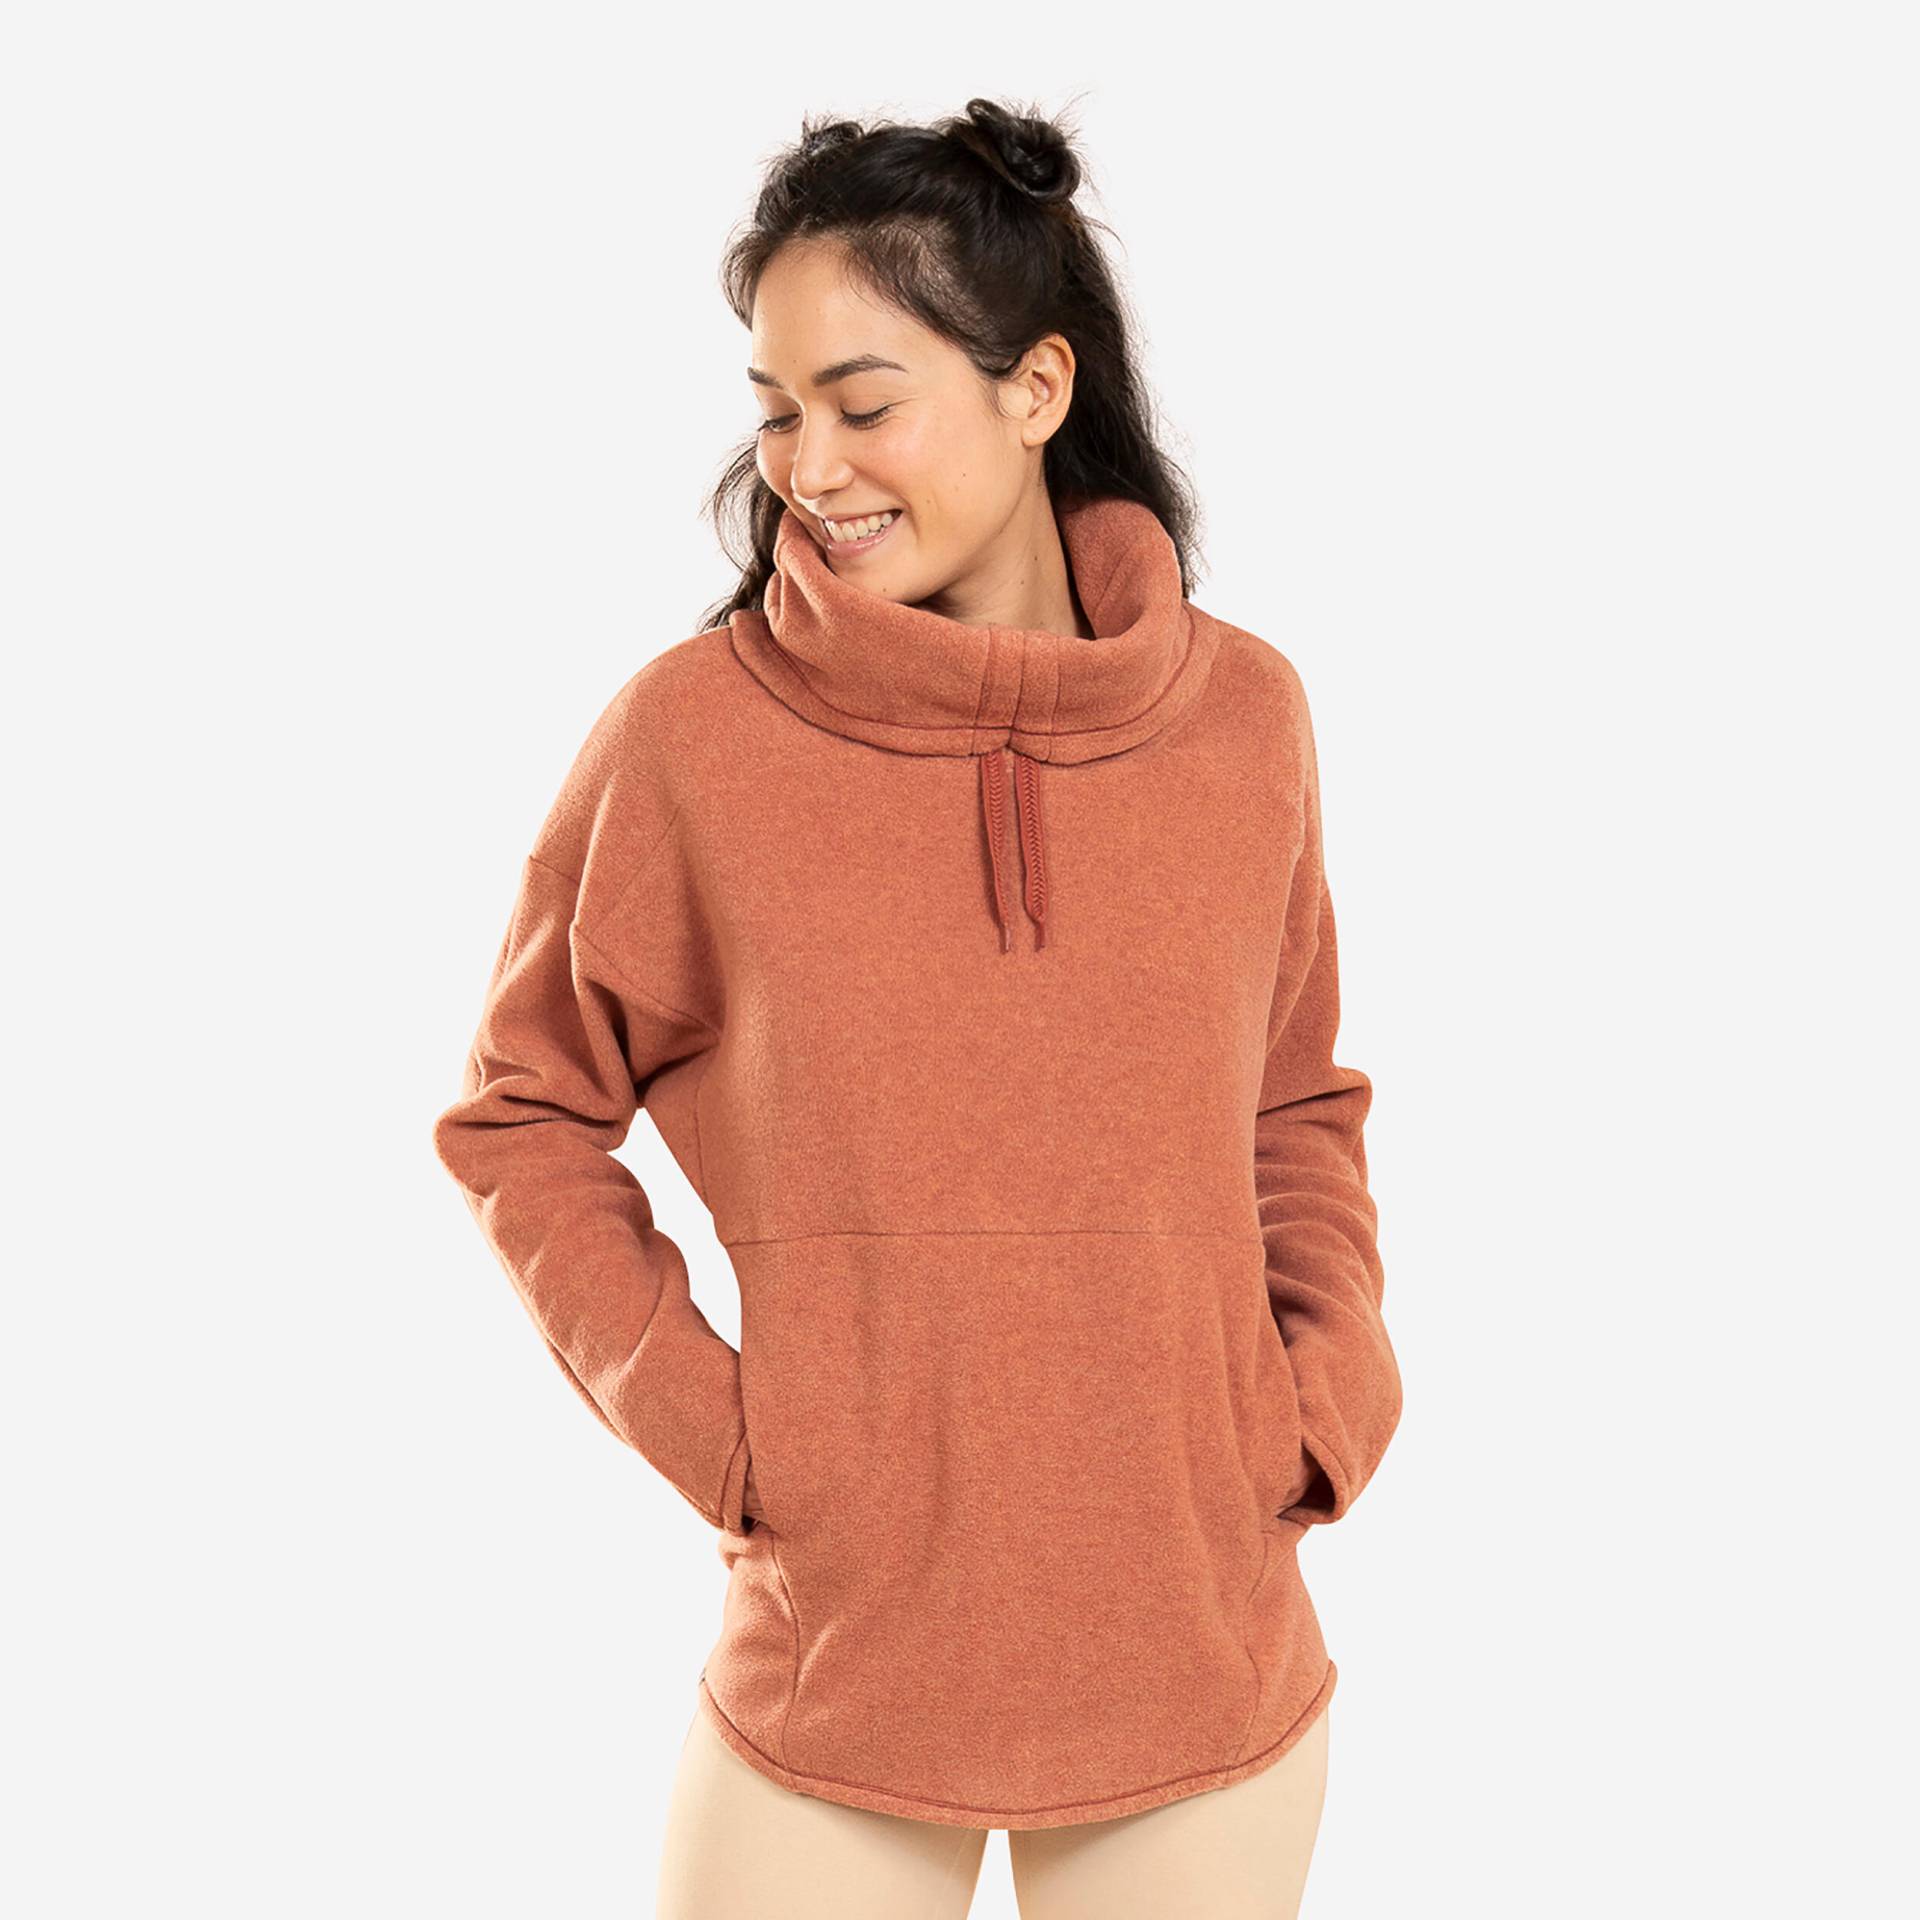 Sweatshirt Yoga Damen Entspannung Fleece - braun von KIMJALY